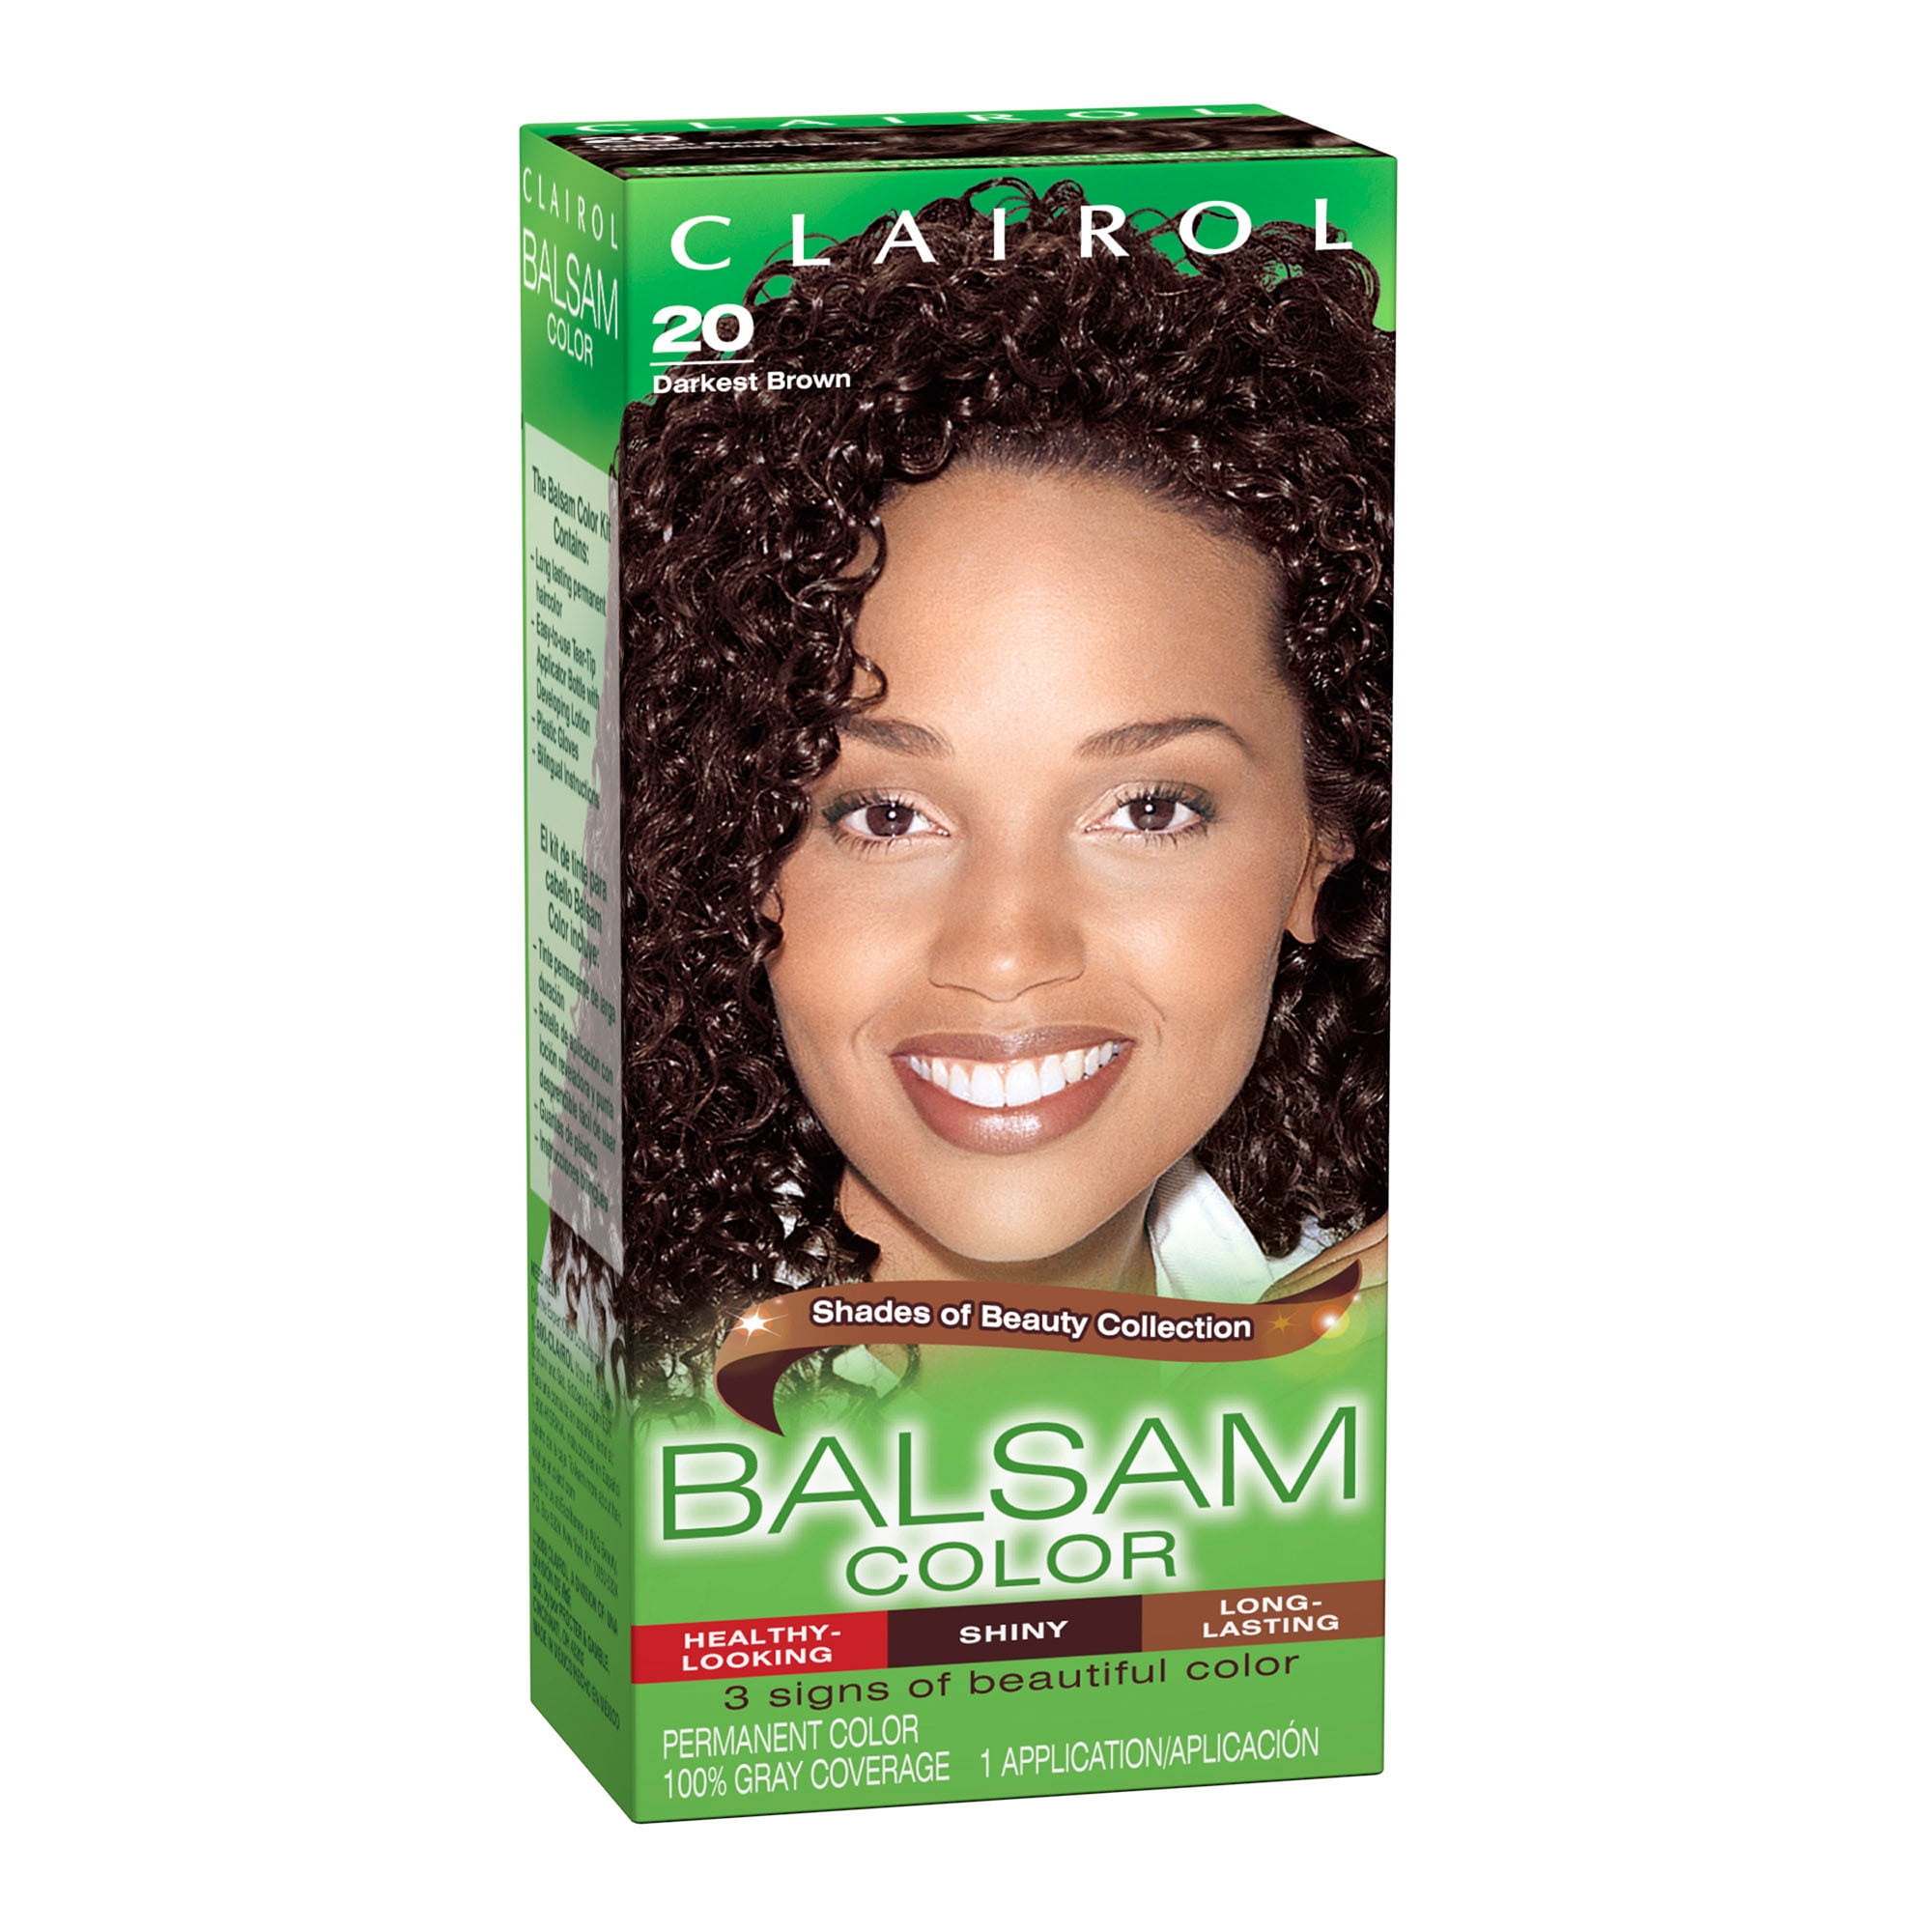 Clairol Balsam Color Hair Color, 020 Darkest Brown 